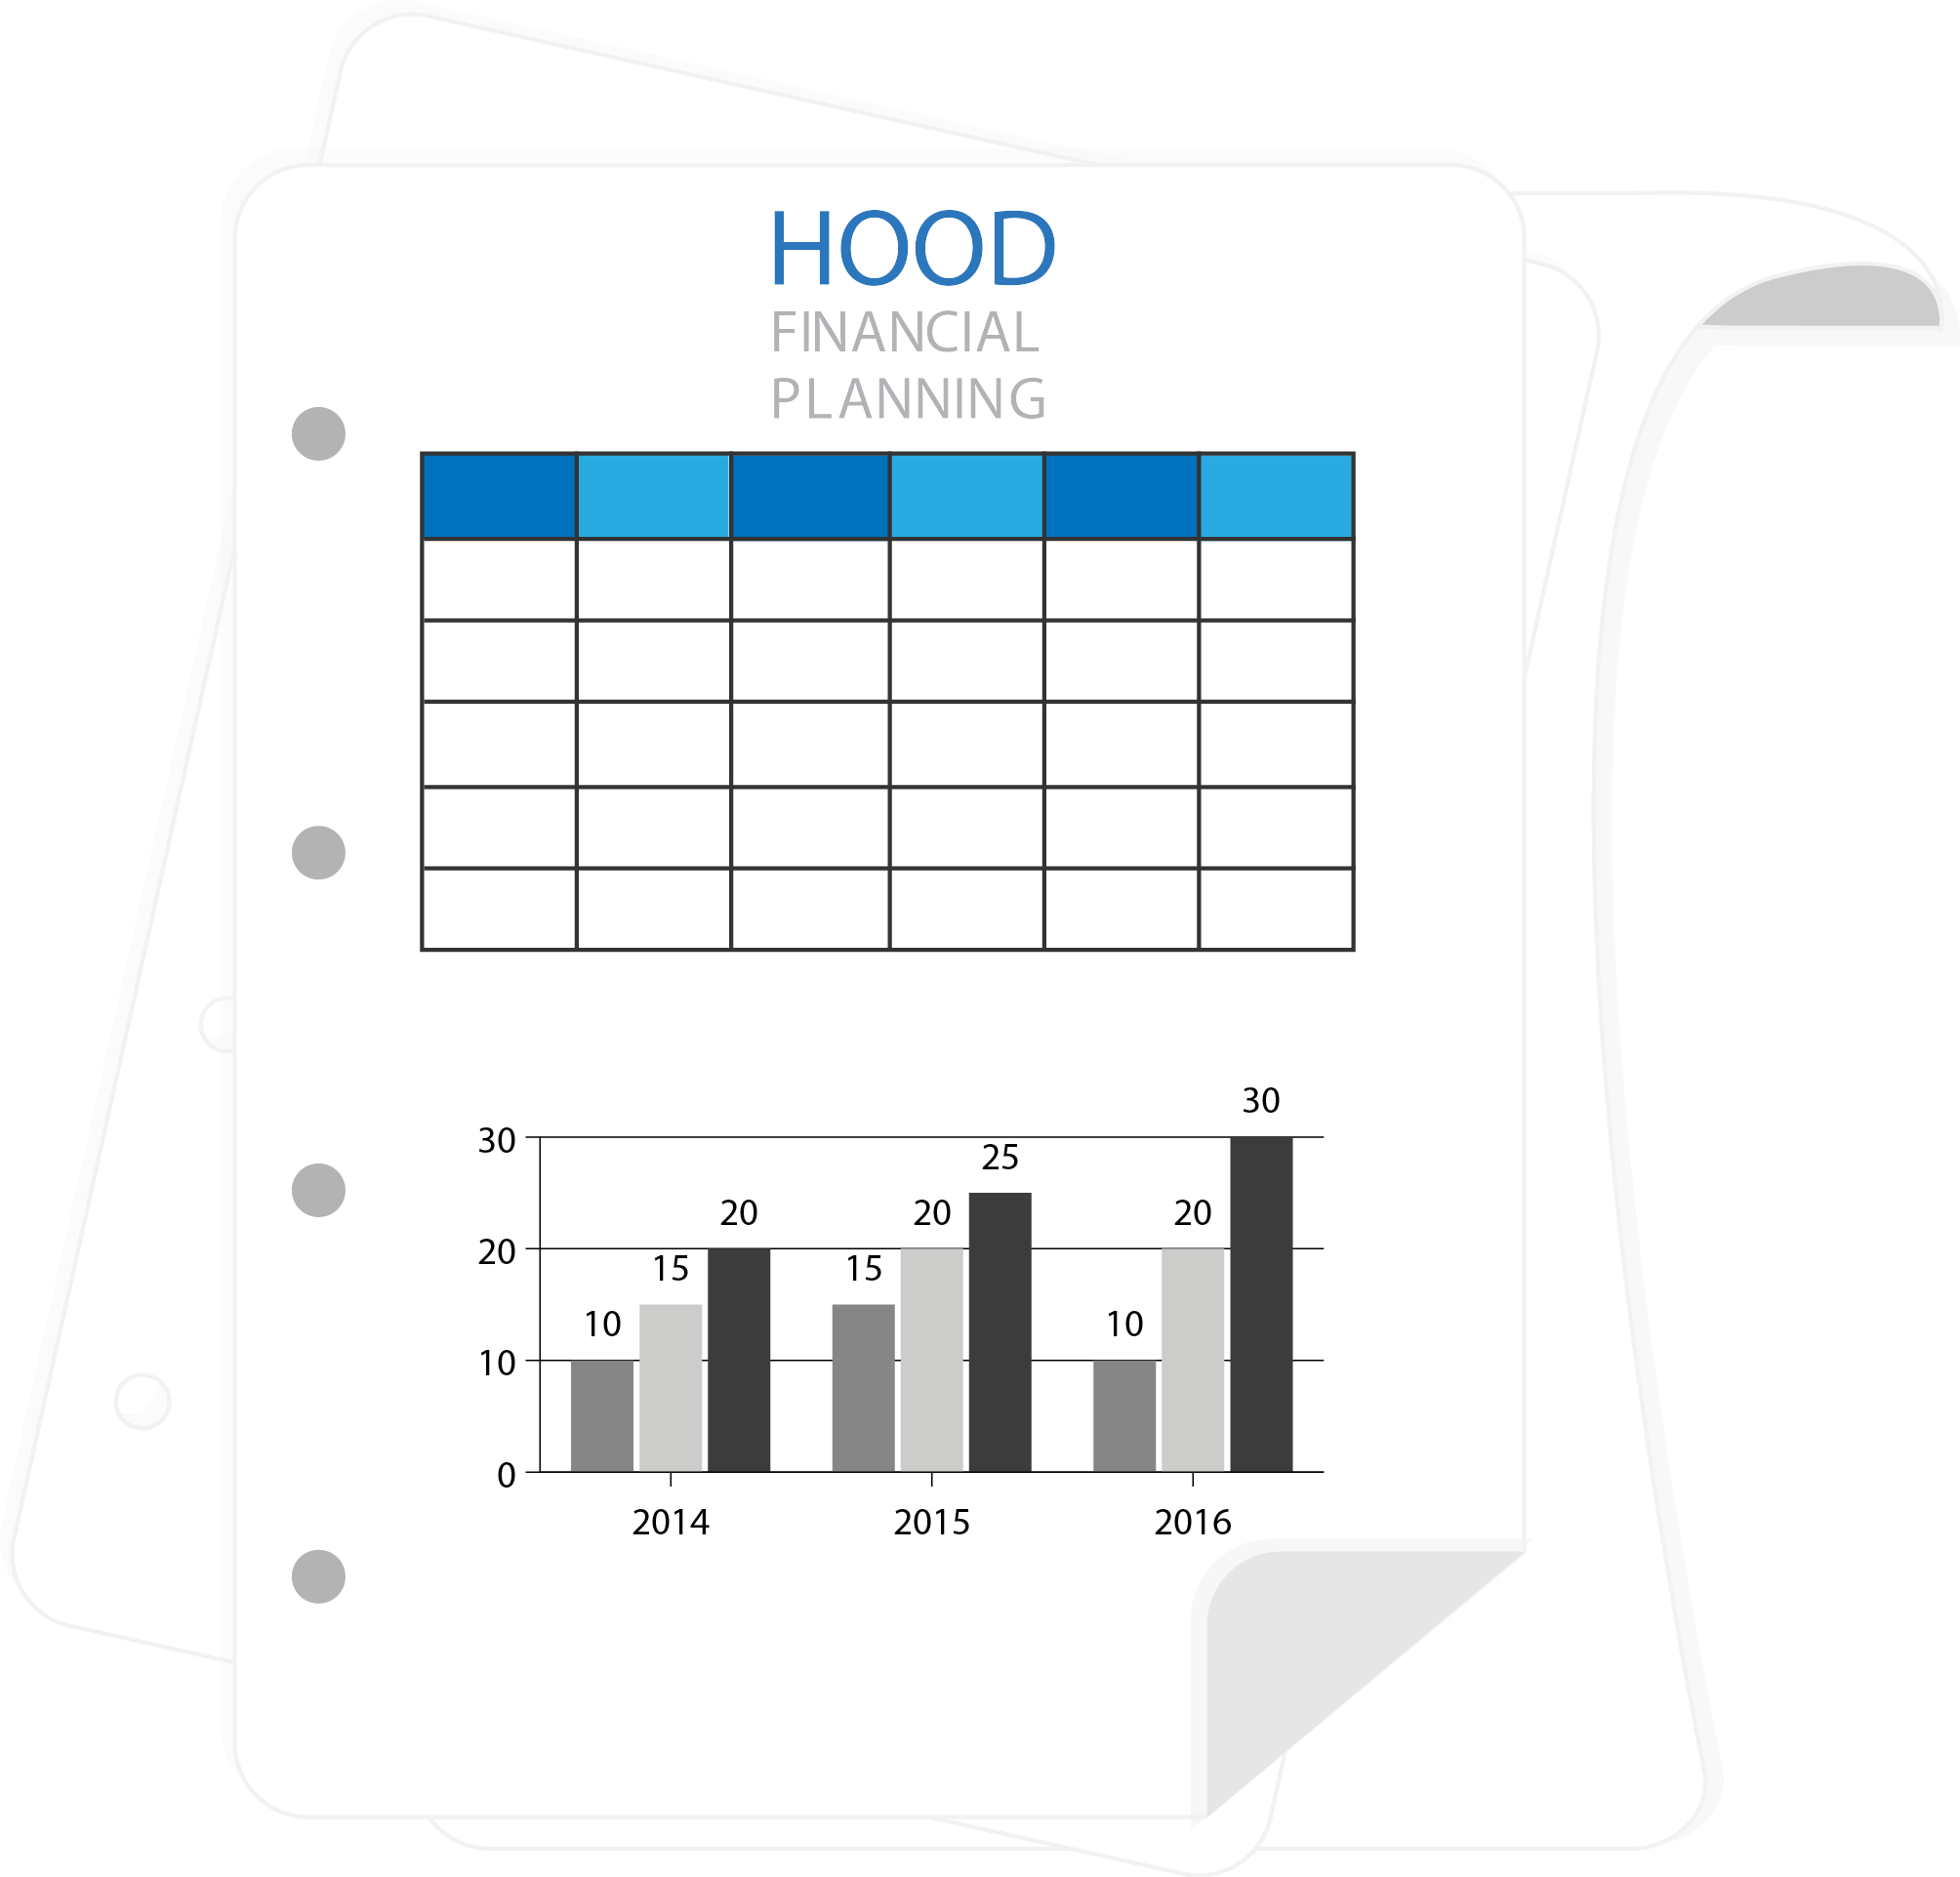 Hood Financial Planning spreadsheet icon image